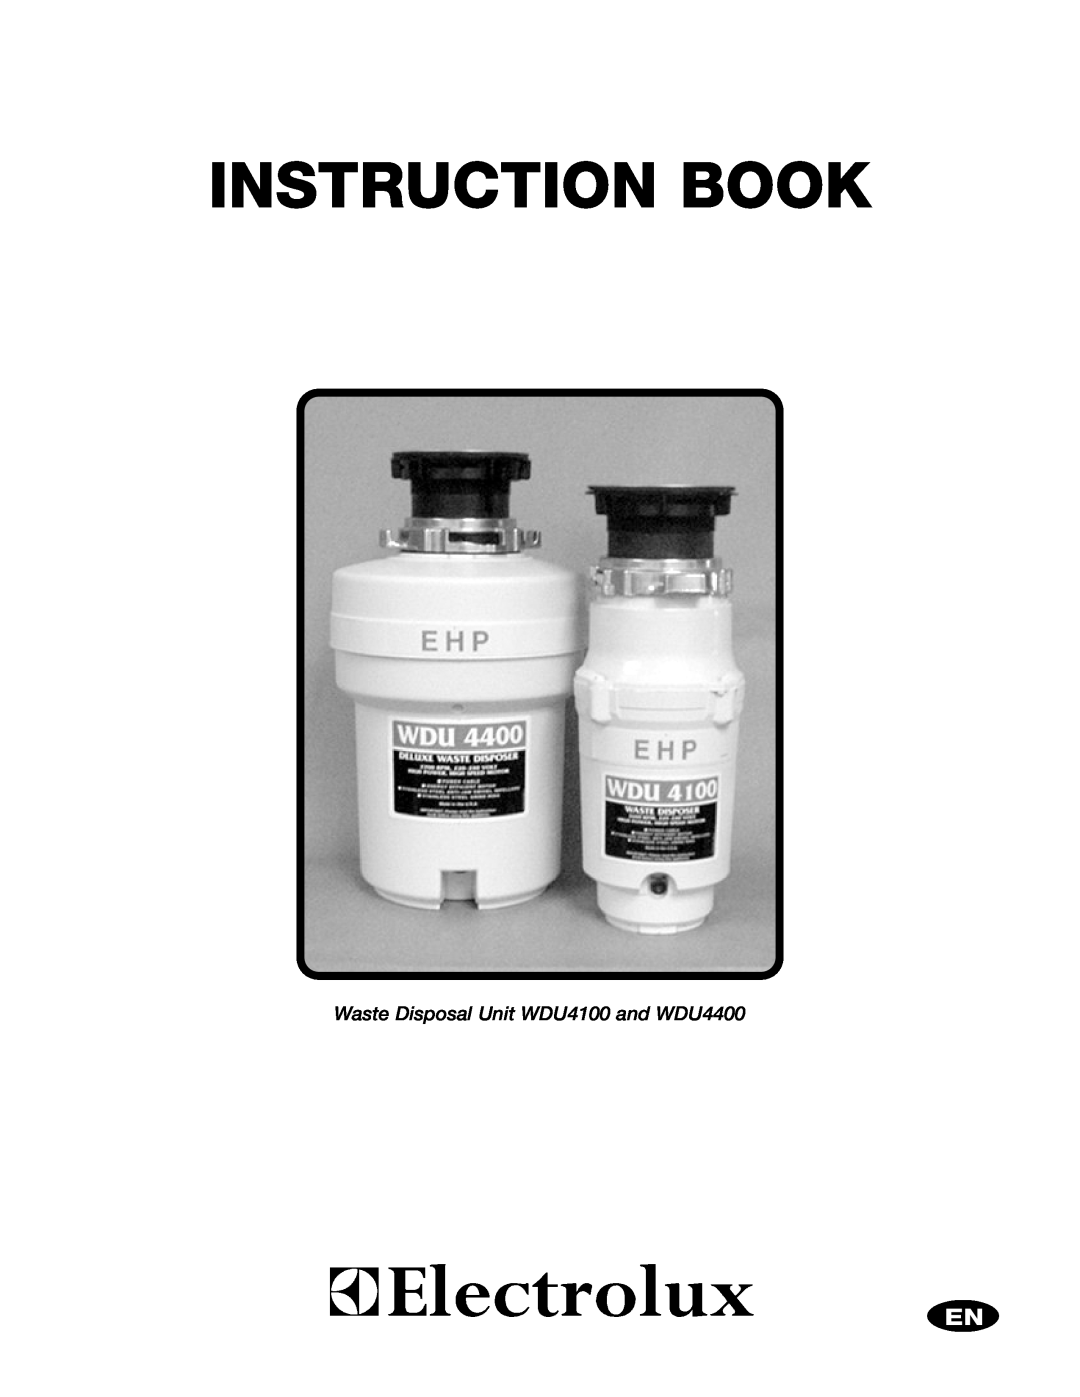 Electrolux manual Instruction Book, Waste Disposal Unit WDU4100 and WDU4400 